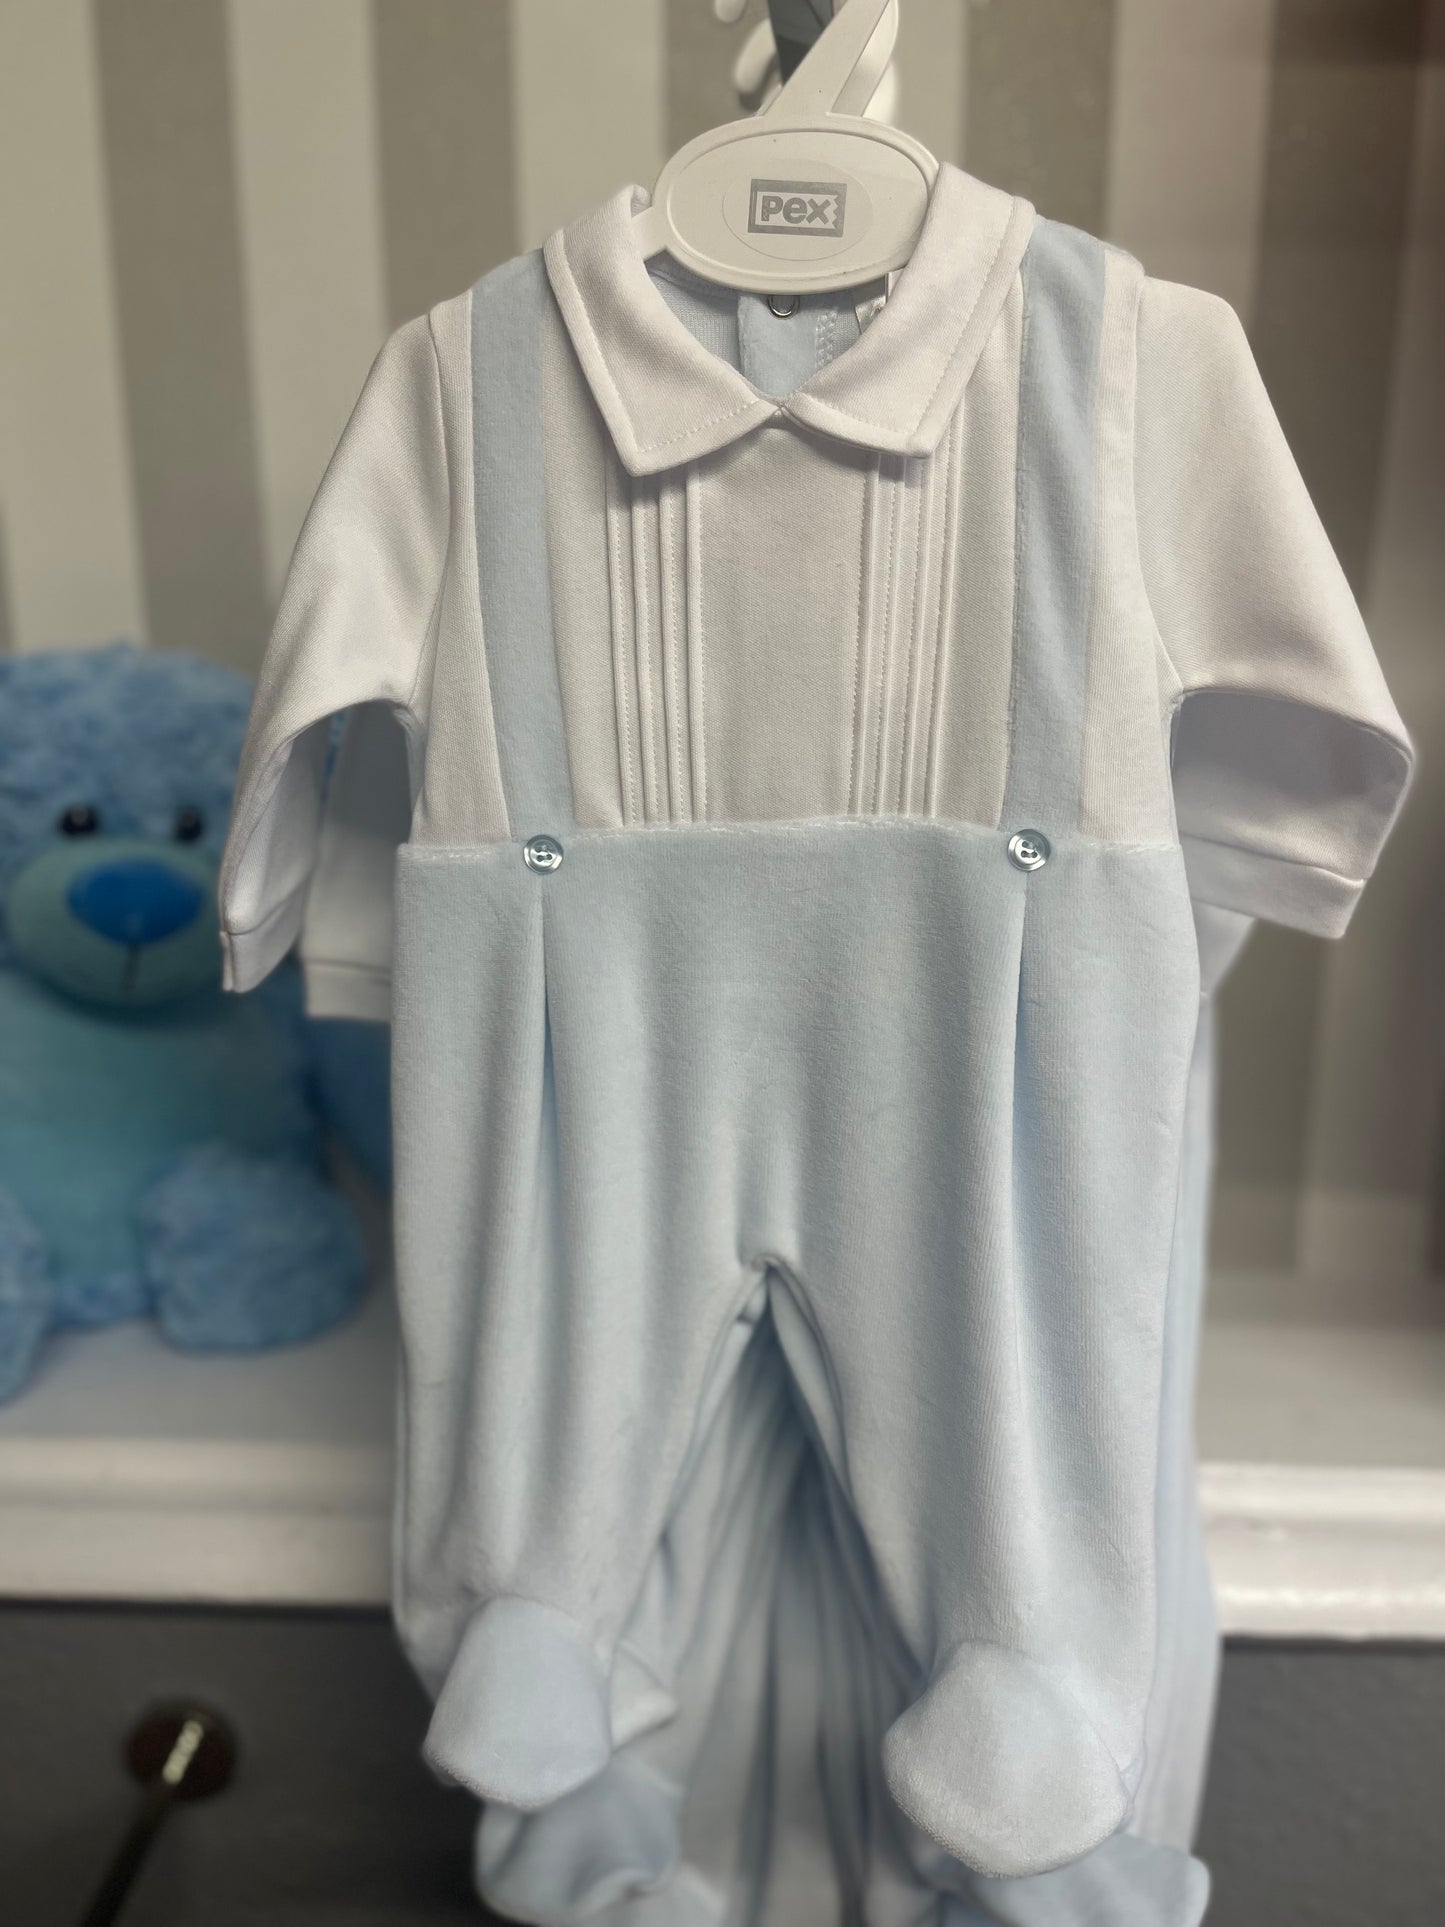 Baby Blue “Suspender” Velour Sleepsuit